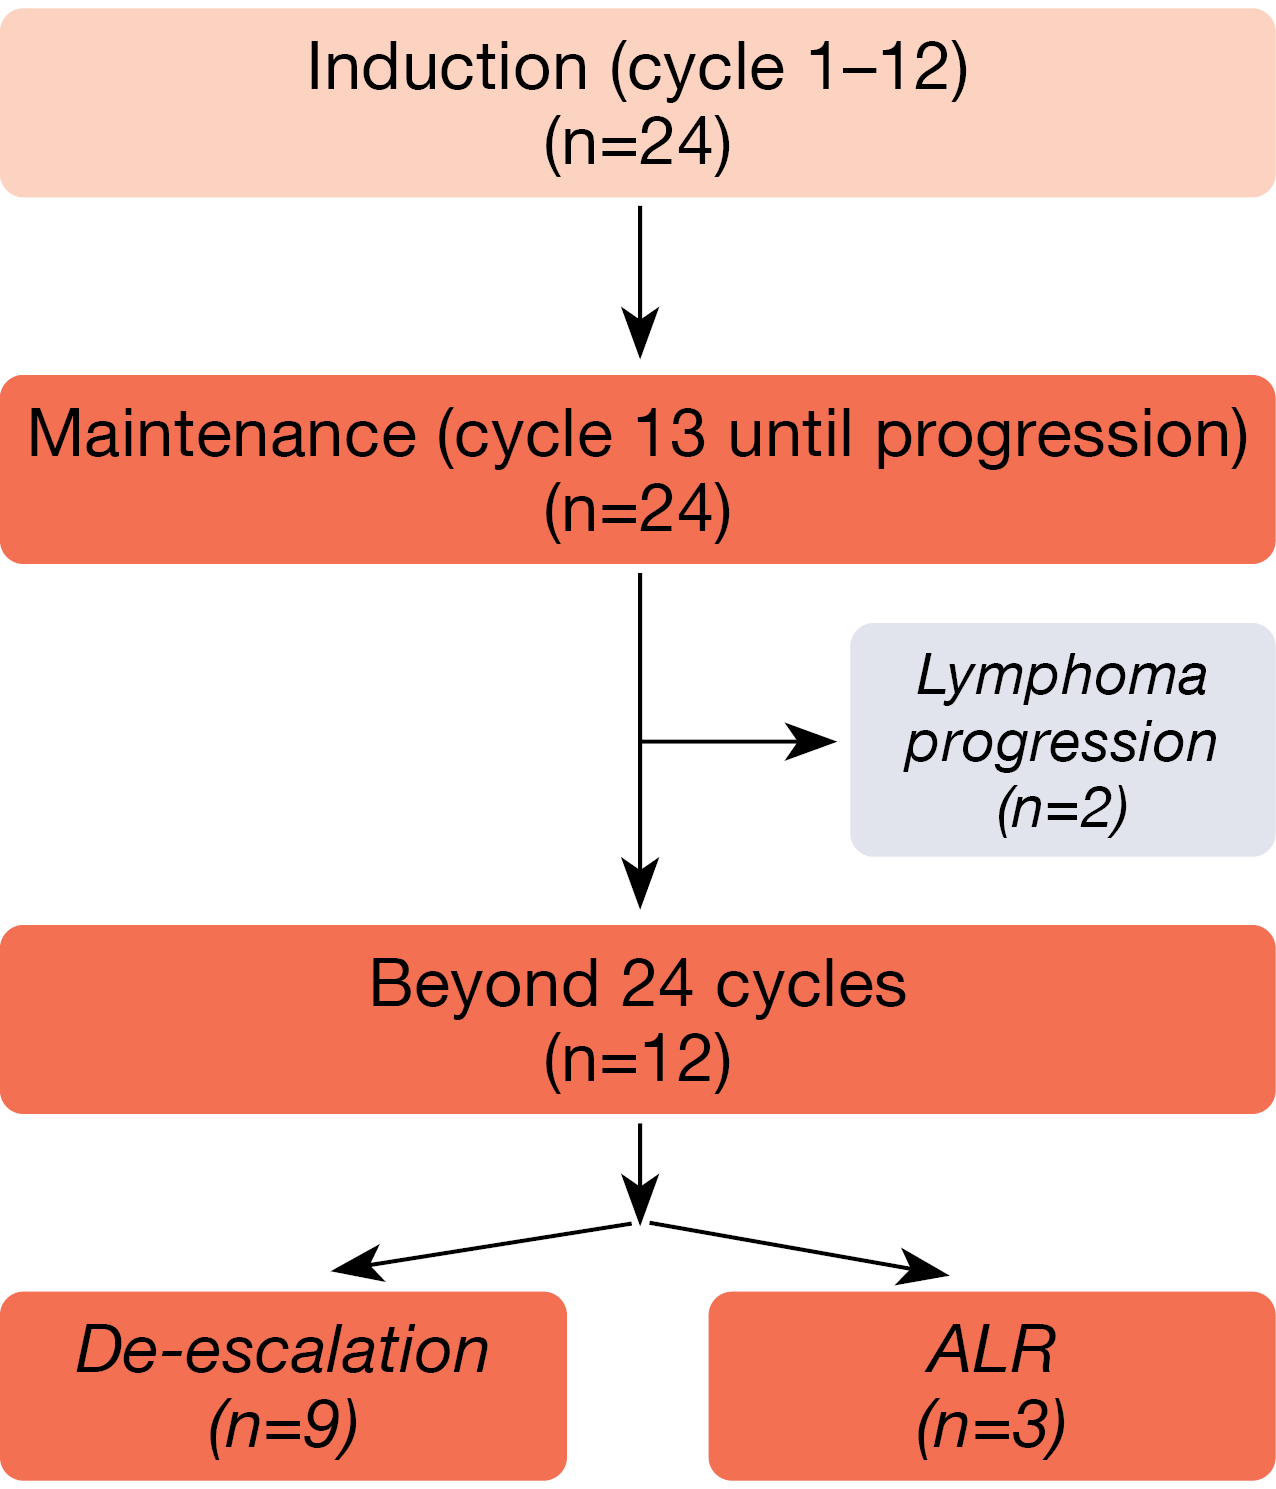 Figure 1: Acalabrutinib plus lenalidomide/rituximab: patient flow in the phase II setting